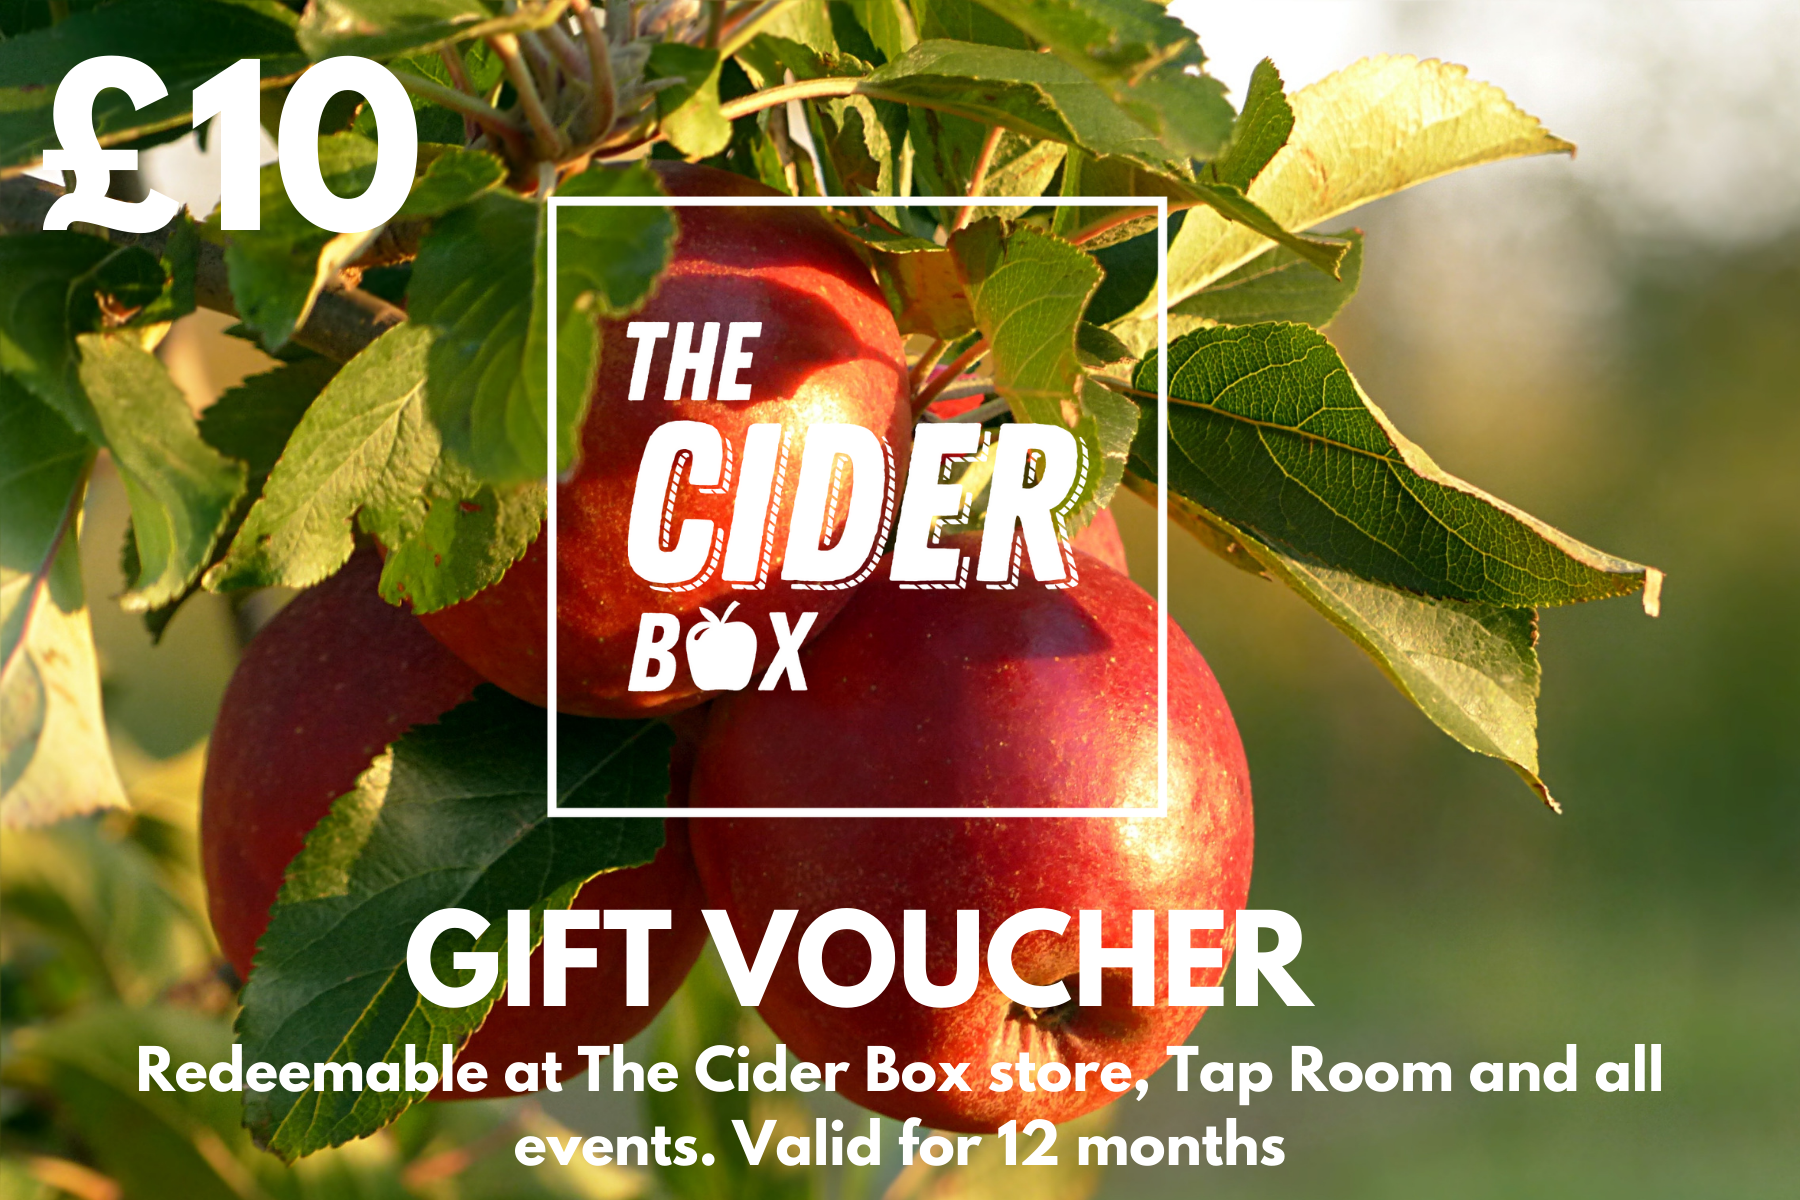 The Cider Box: Gift Voucher